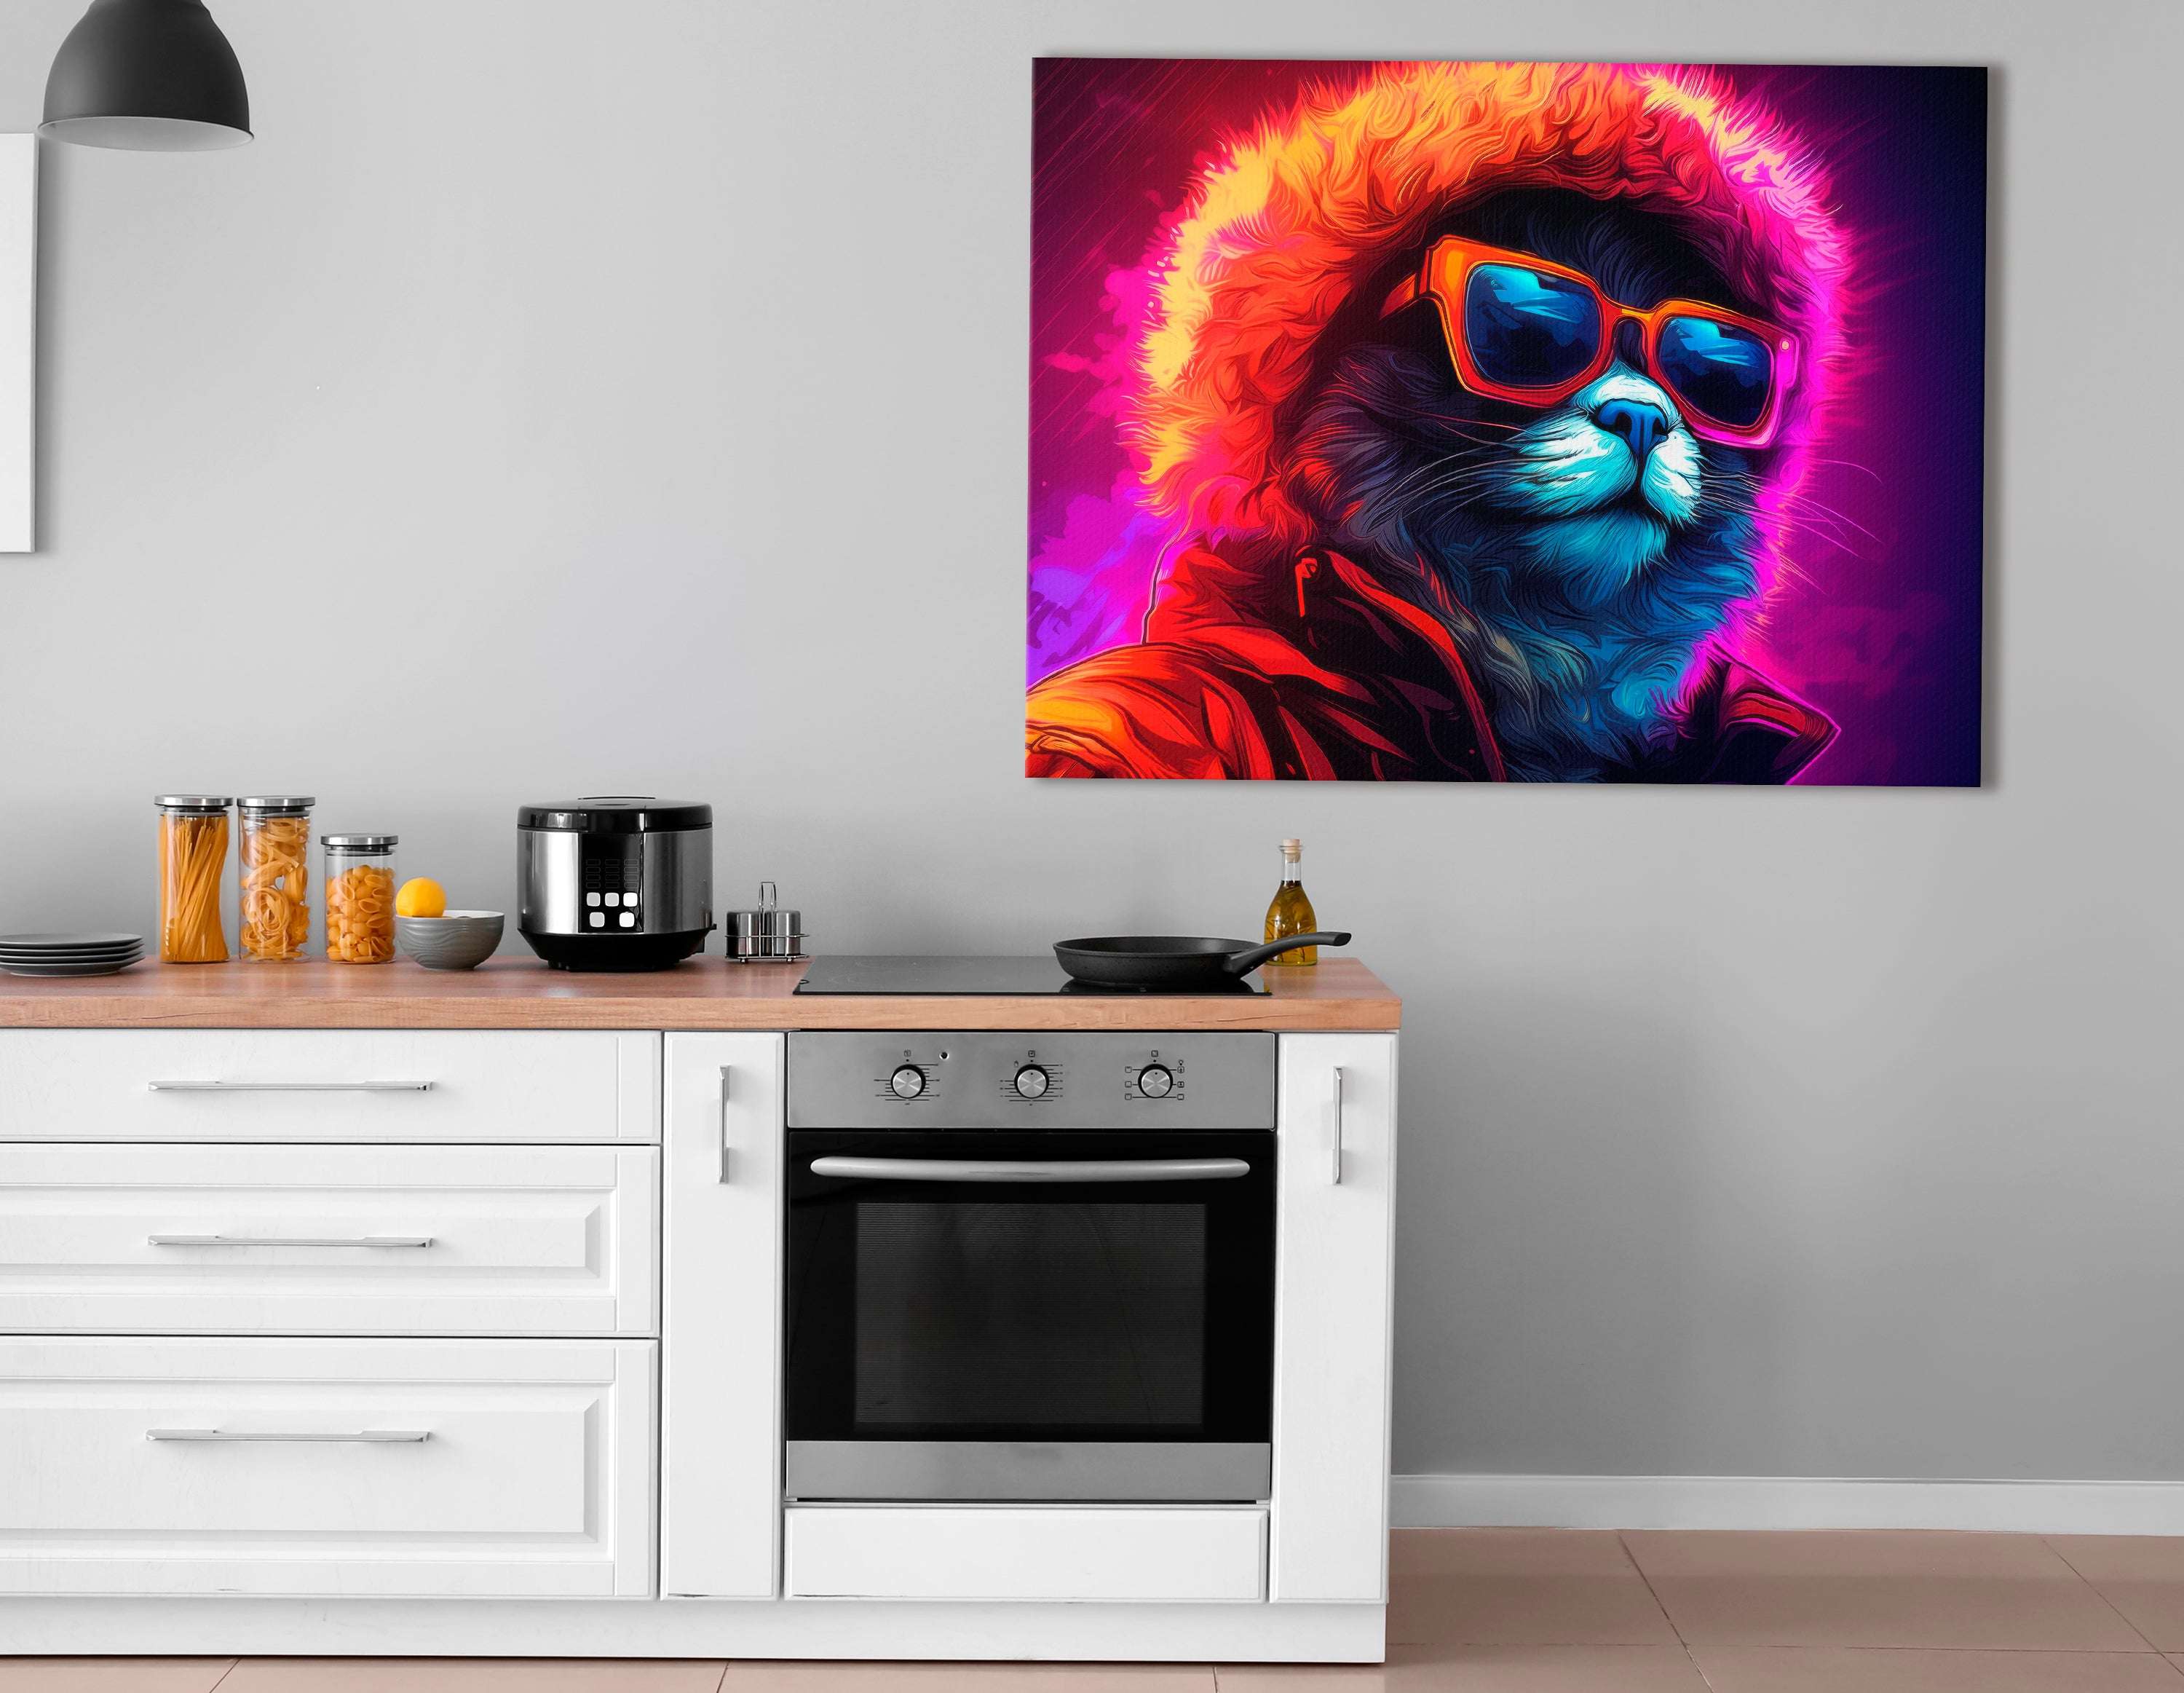 Neon Cat in Stylish Attire - Canvas Print - Artoholica Ready to Hang Canvas Print